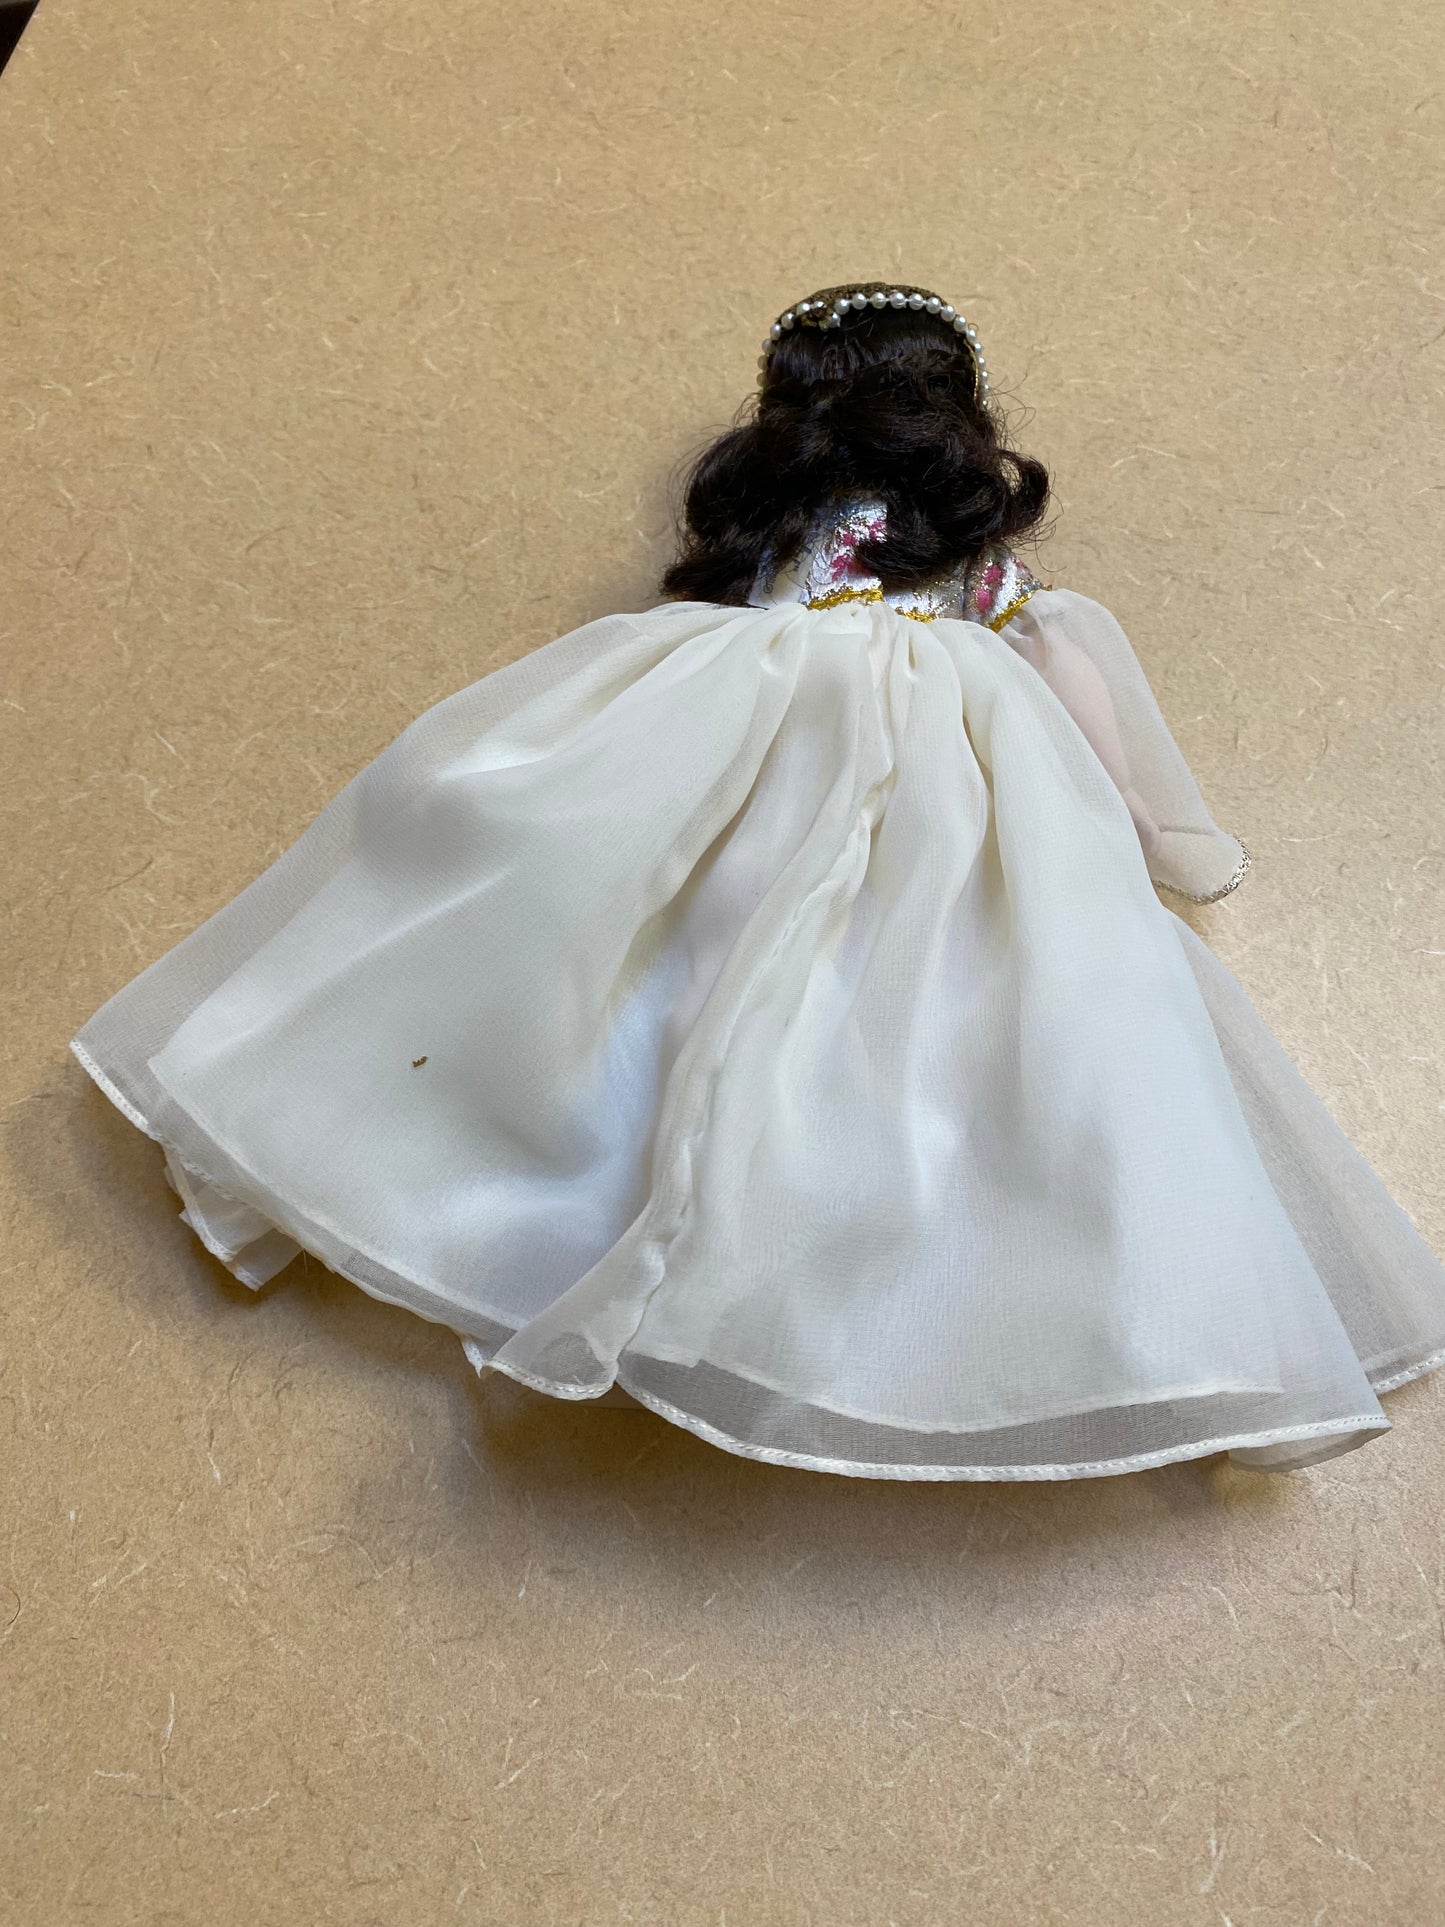 Madame Alexander's "Juliet" Doll